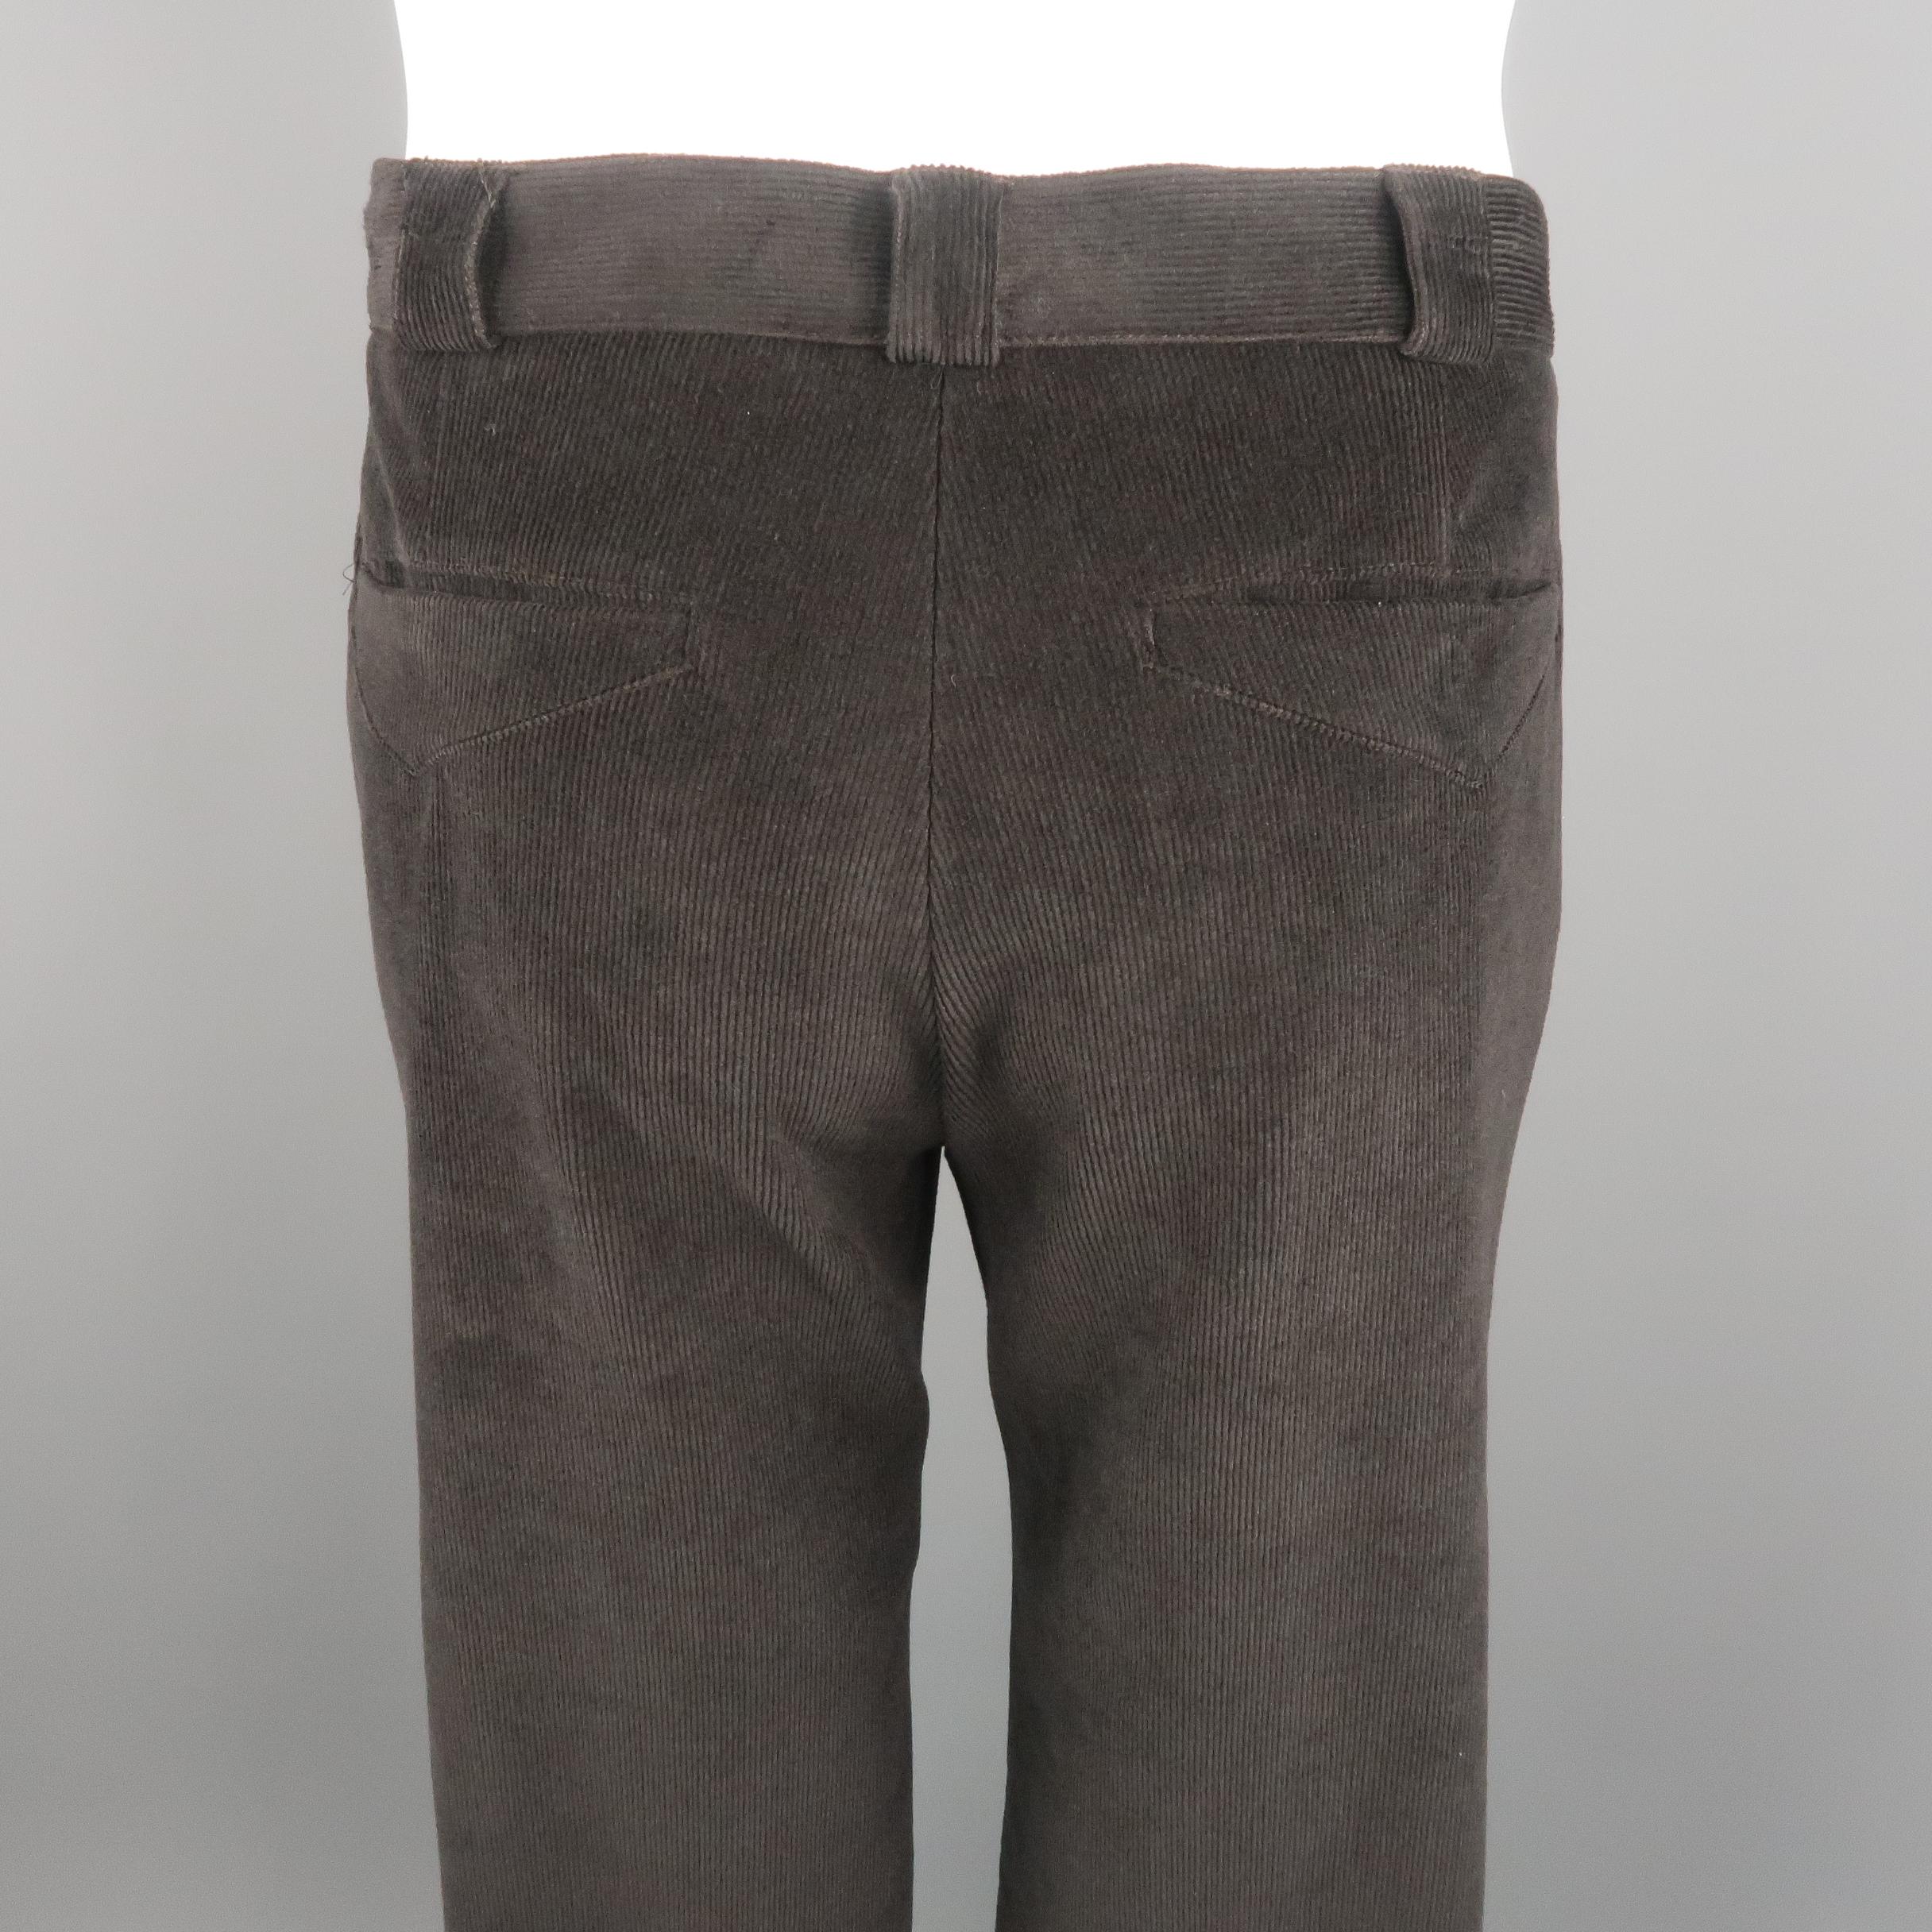 Men's GIORGIO ARMANI Size 34 Brown Solid Corduroy Dress Pants